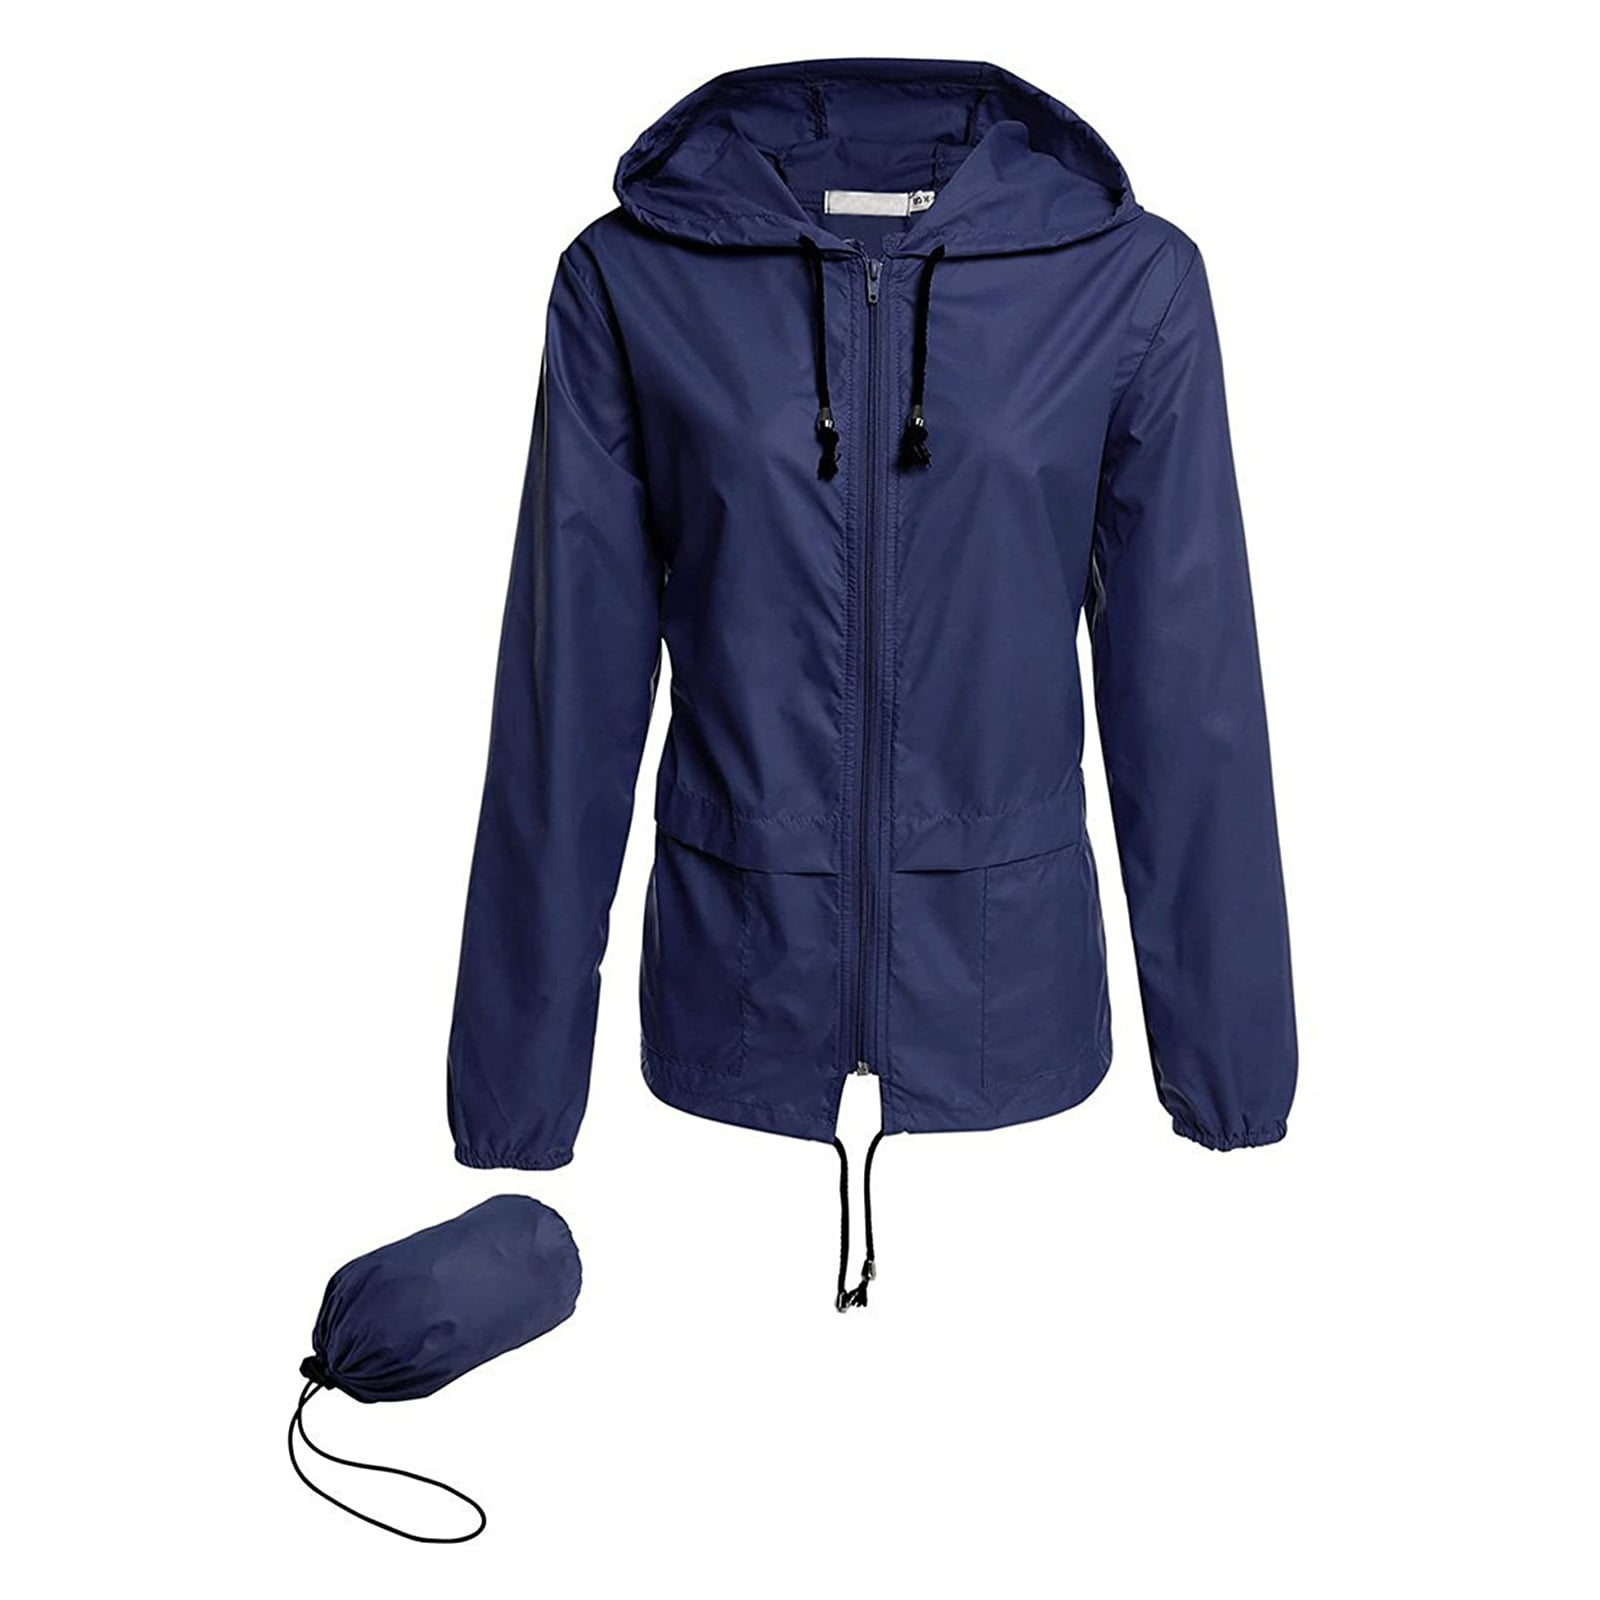 Black,Large Bifast Boy Rainwear Active Outdoor Hooded Packable Lightweight Jacket Solid